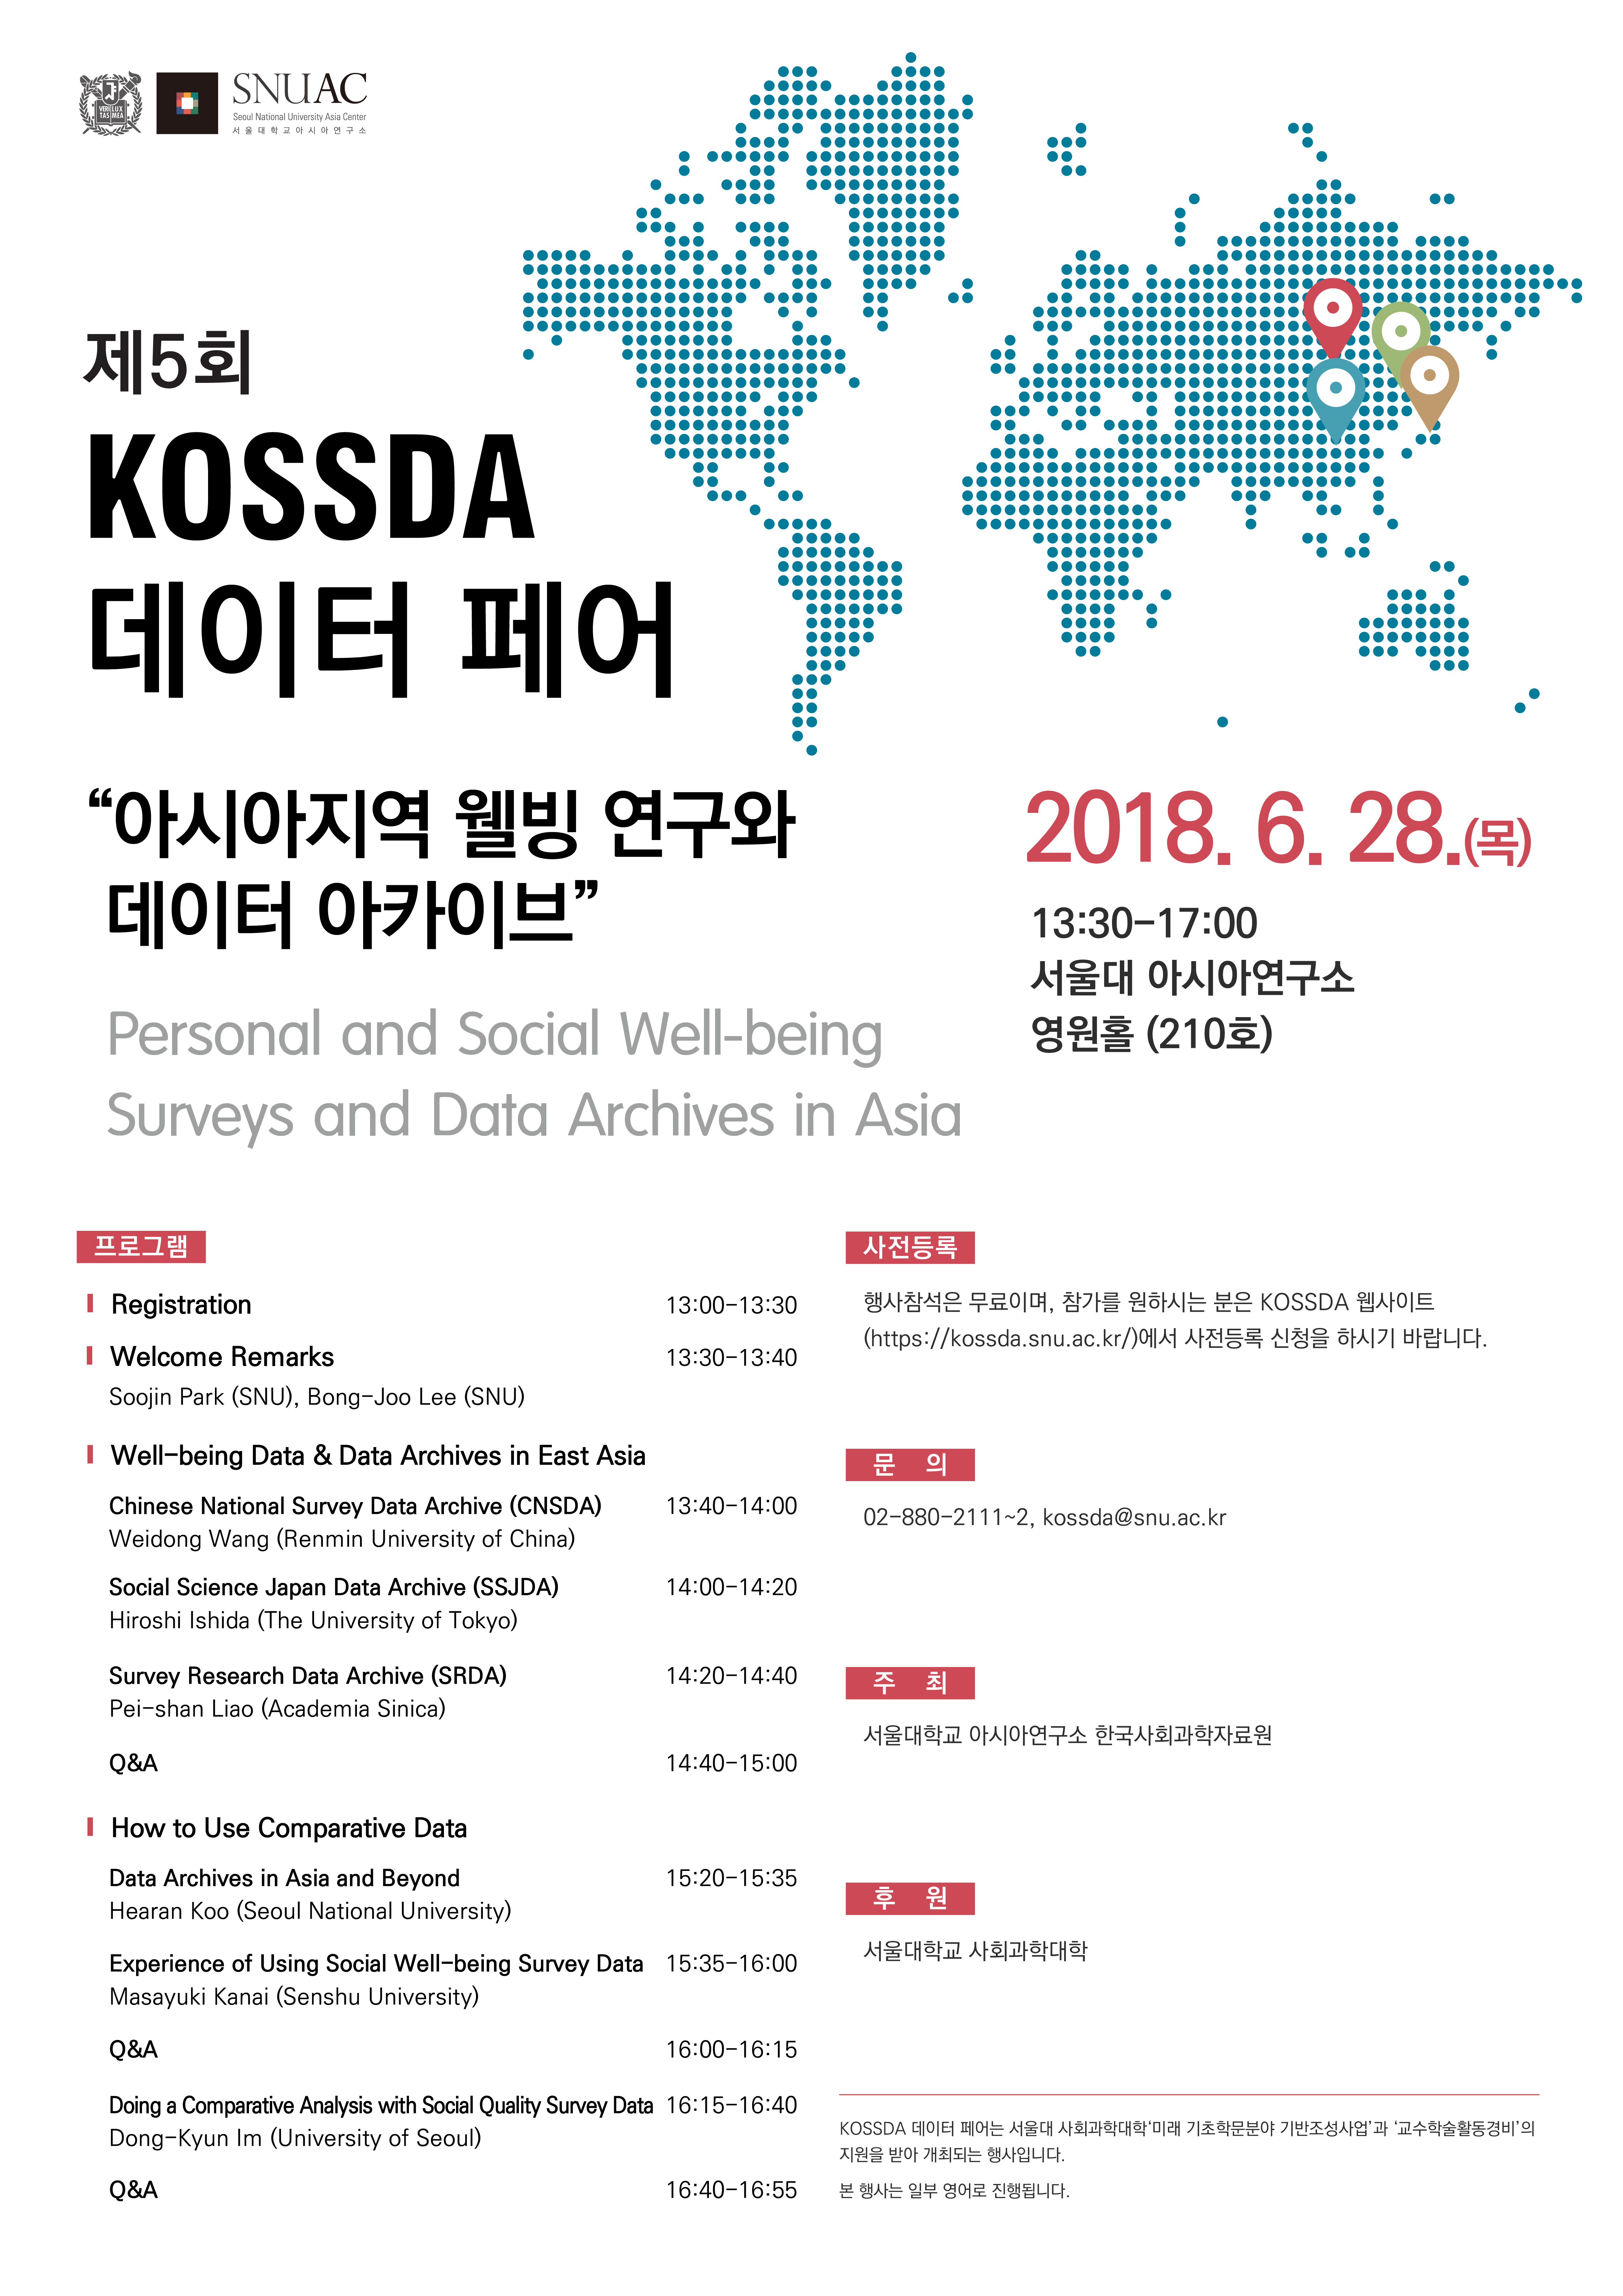 KOSSDA 국제 컨퍼런스 포스터